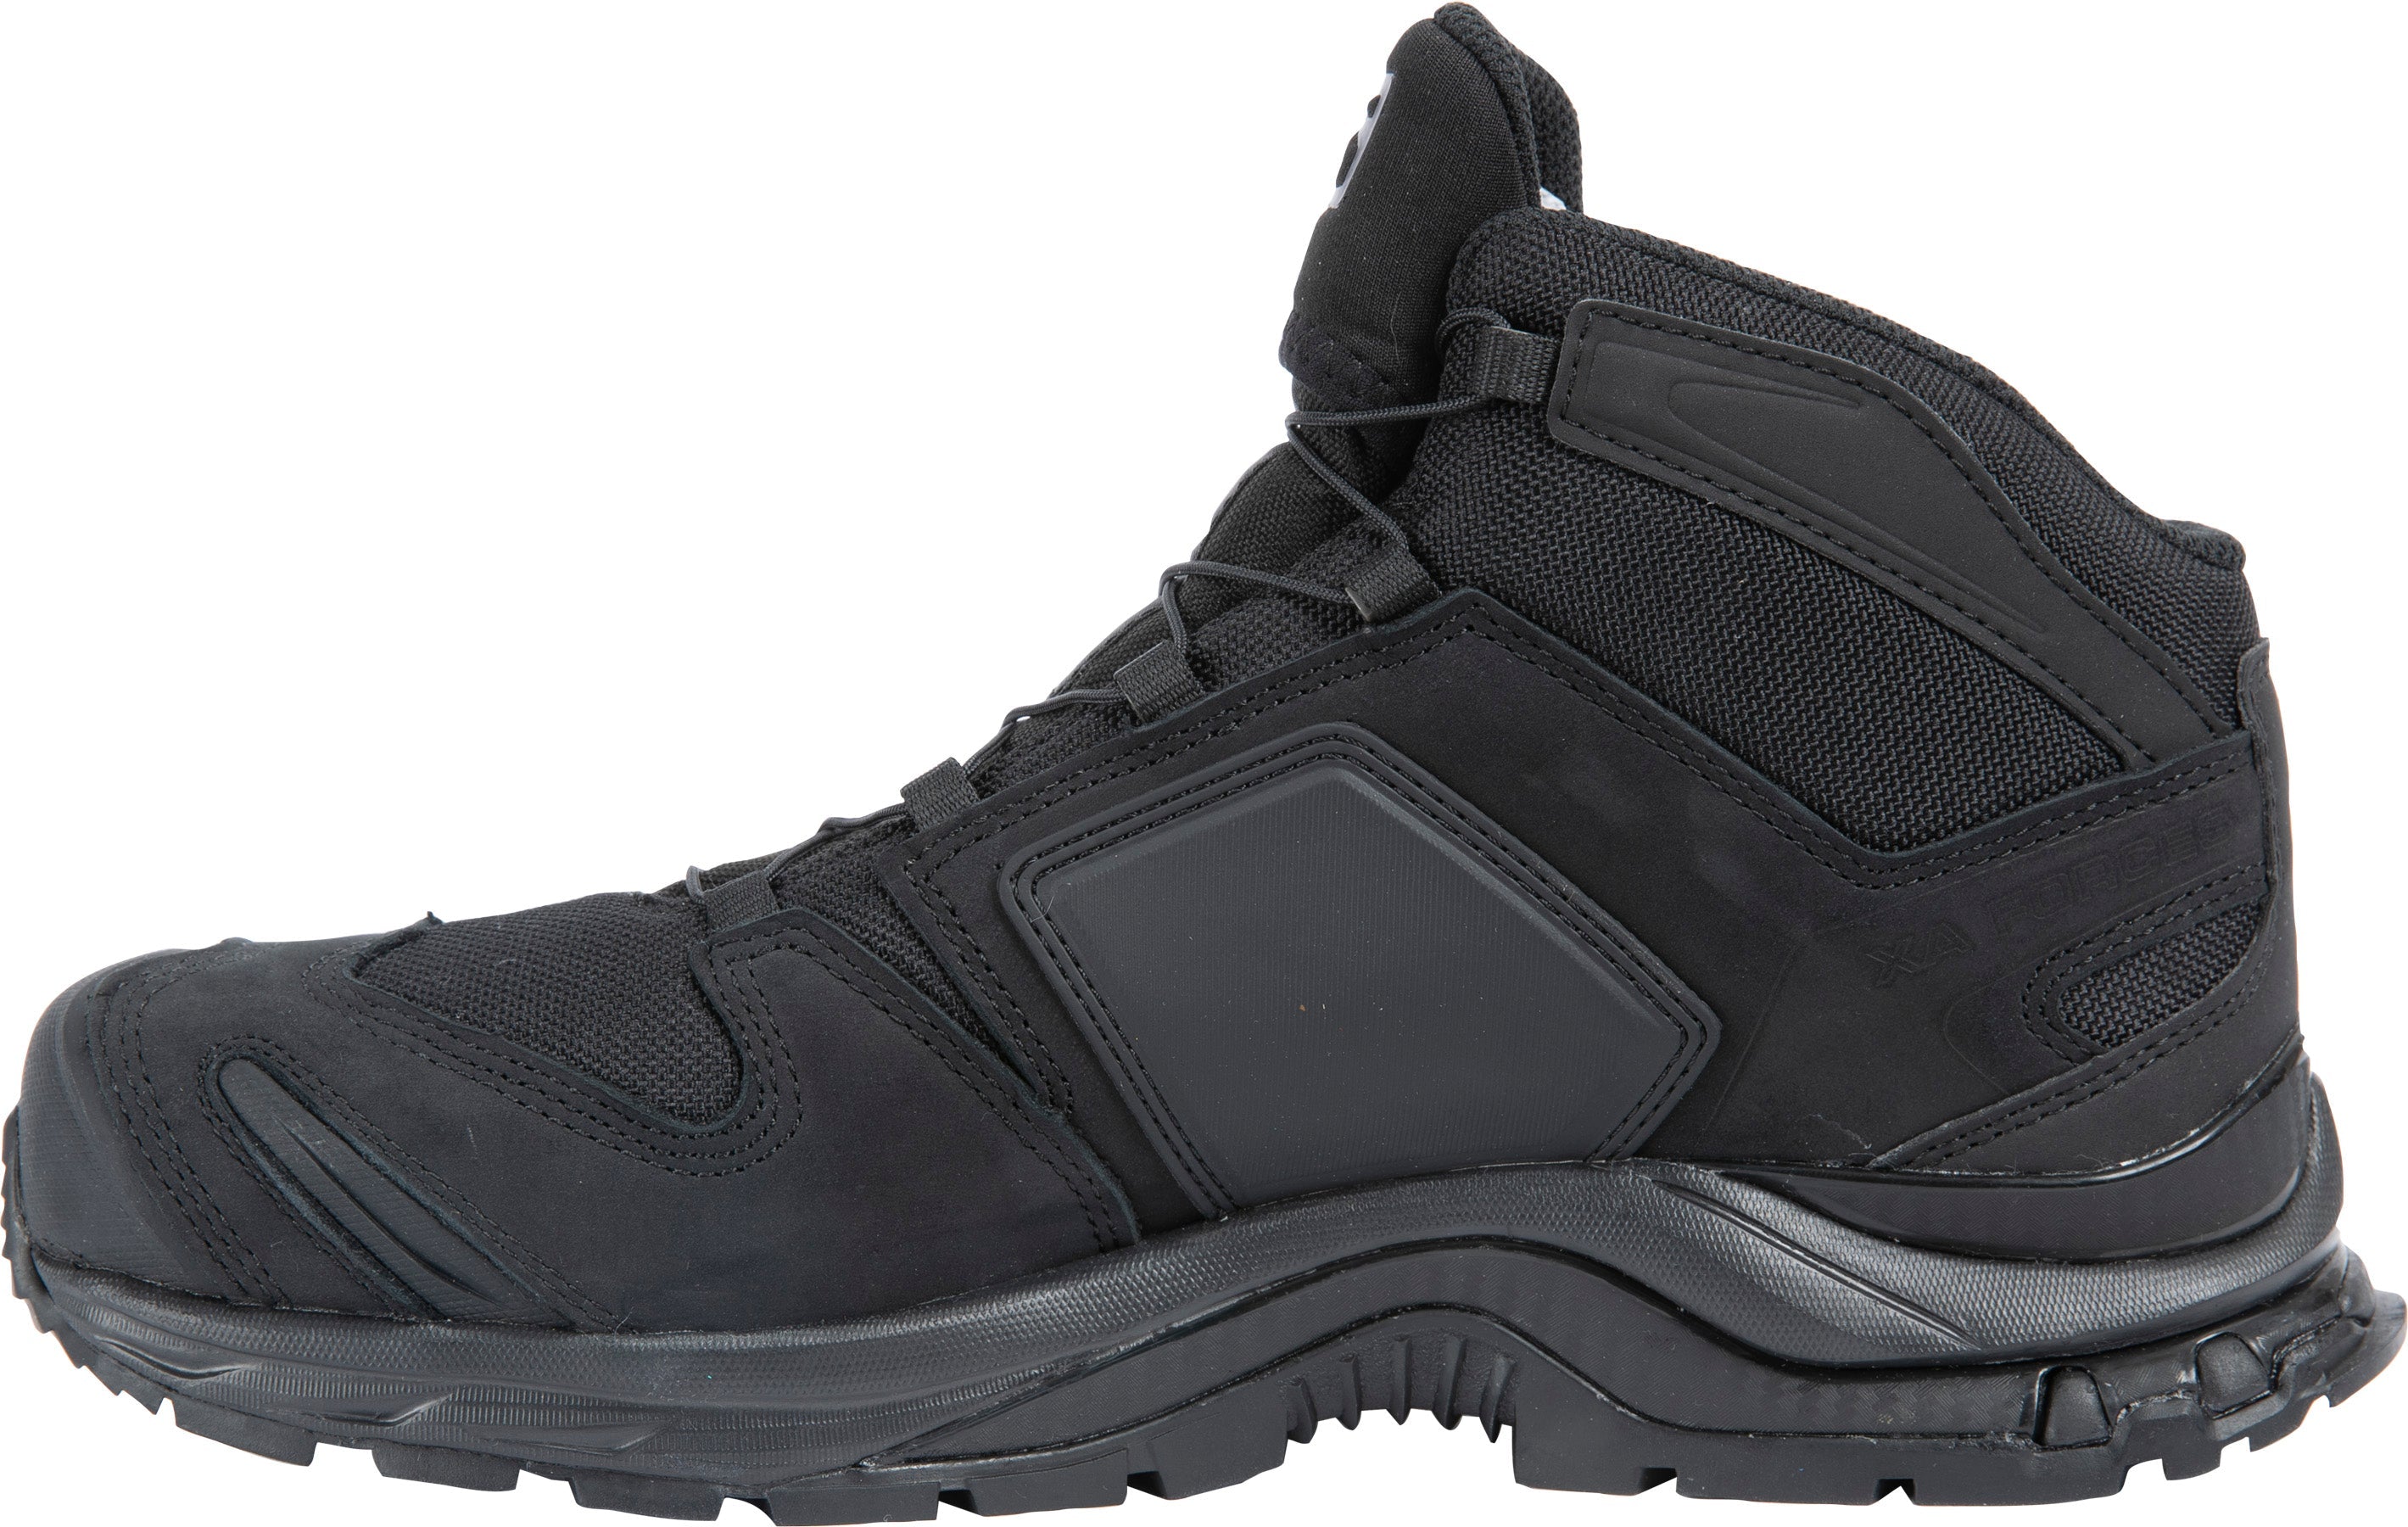 Salomon XA Forces Mid GTX Boot Tactical Shoe Salomon 